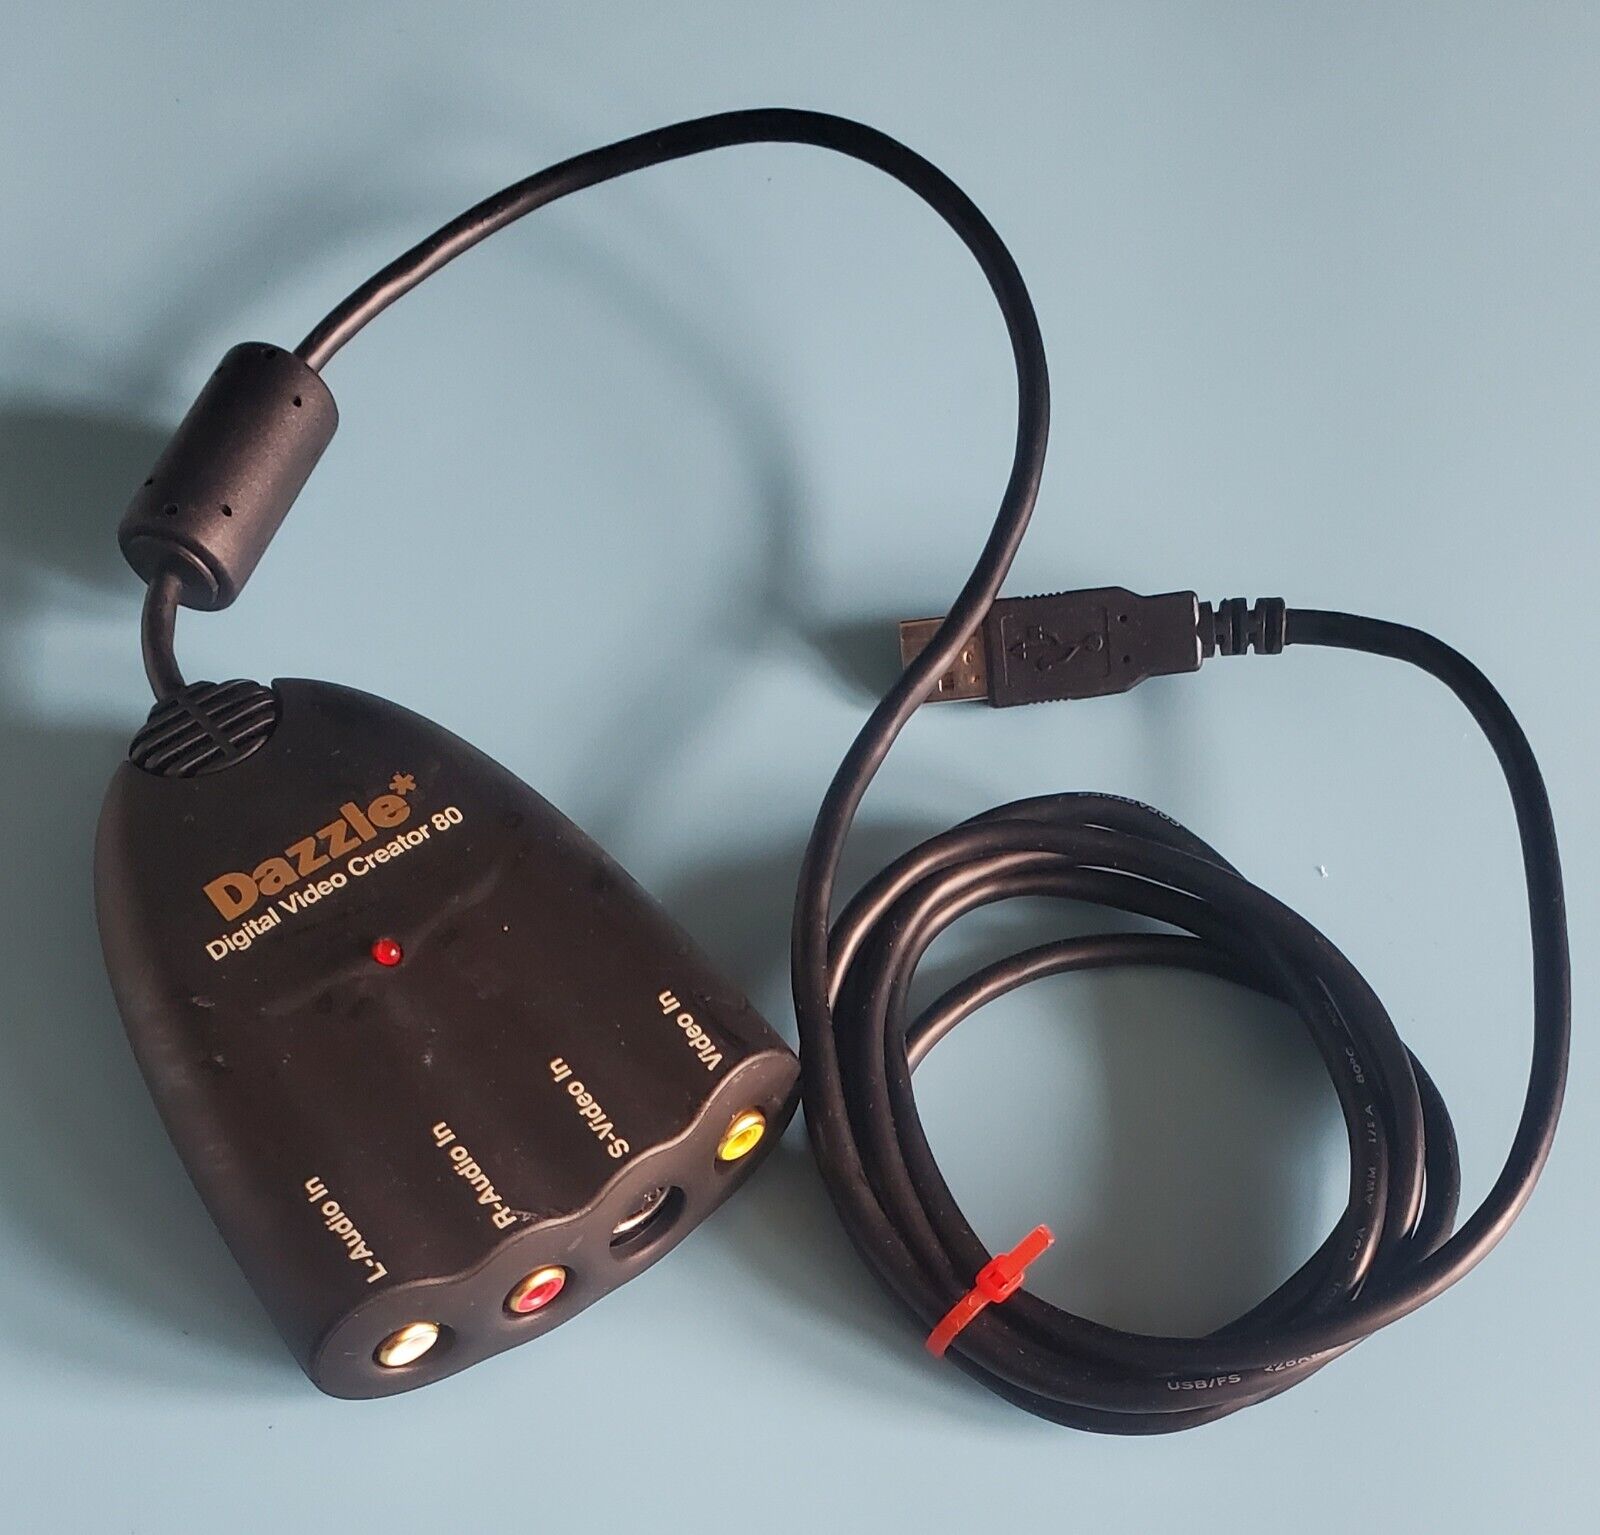 DAZZLE DVC-80 Digital Video Creator 80 Video Capture Device RCA USB Cable